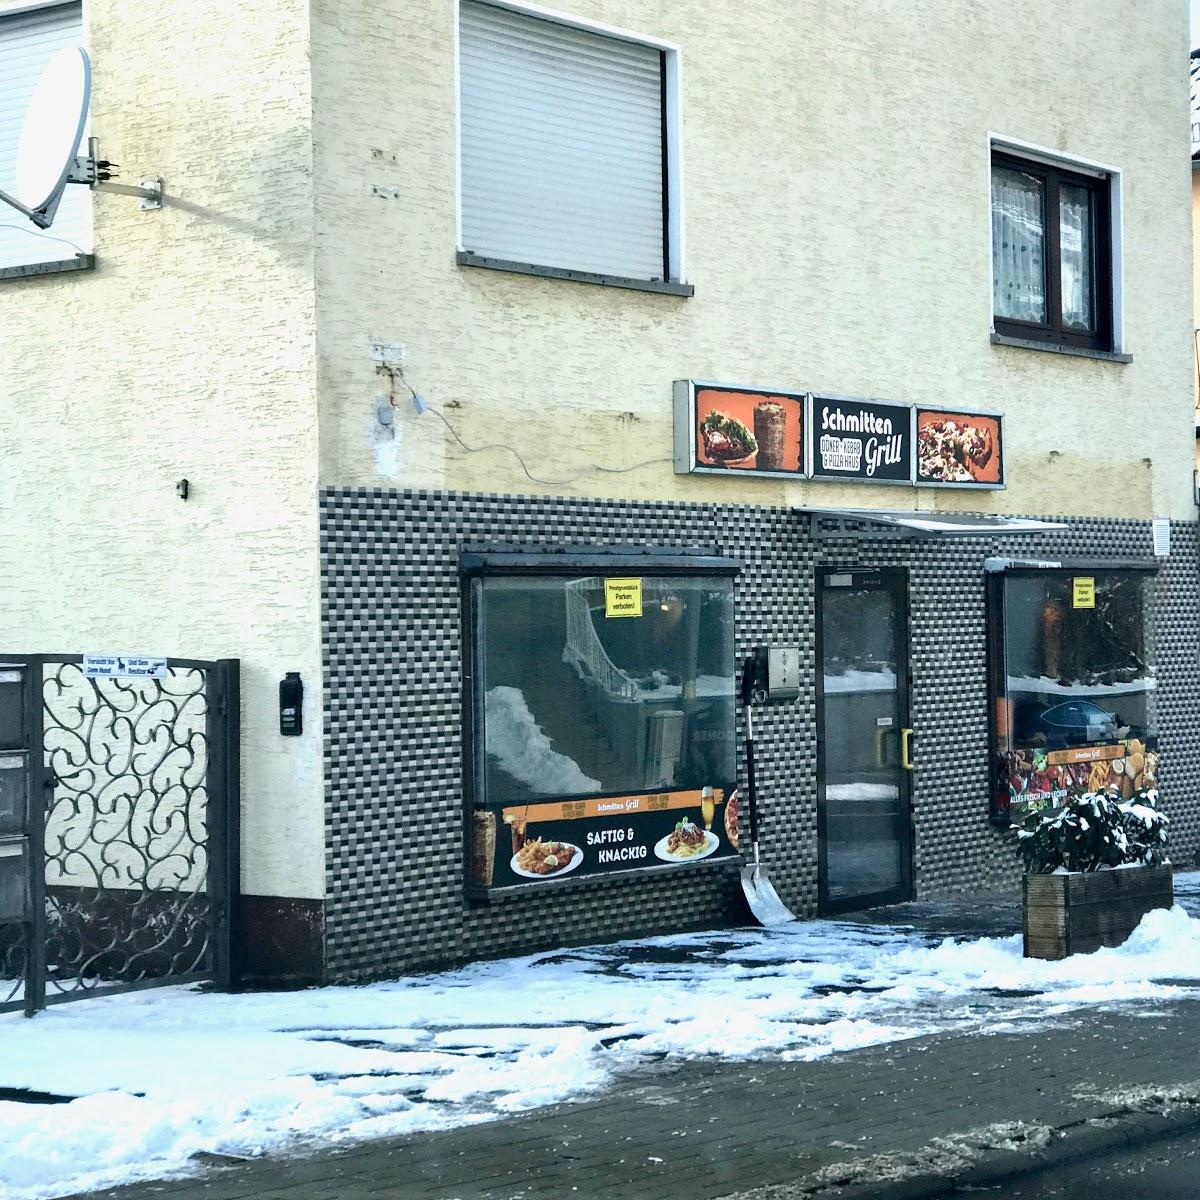 Restaurant "Grill, Döner-, Kebab- Pizzahaus, Inh. Faik Altunova" in  Schmitten